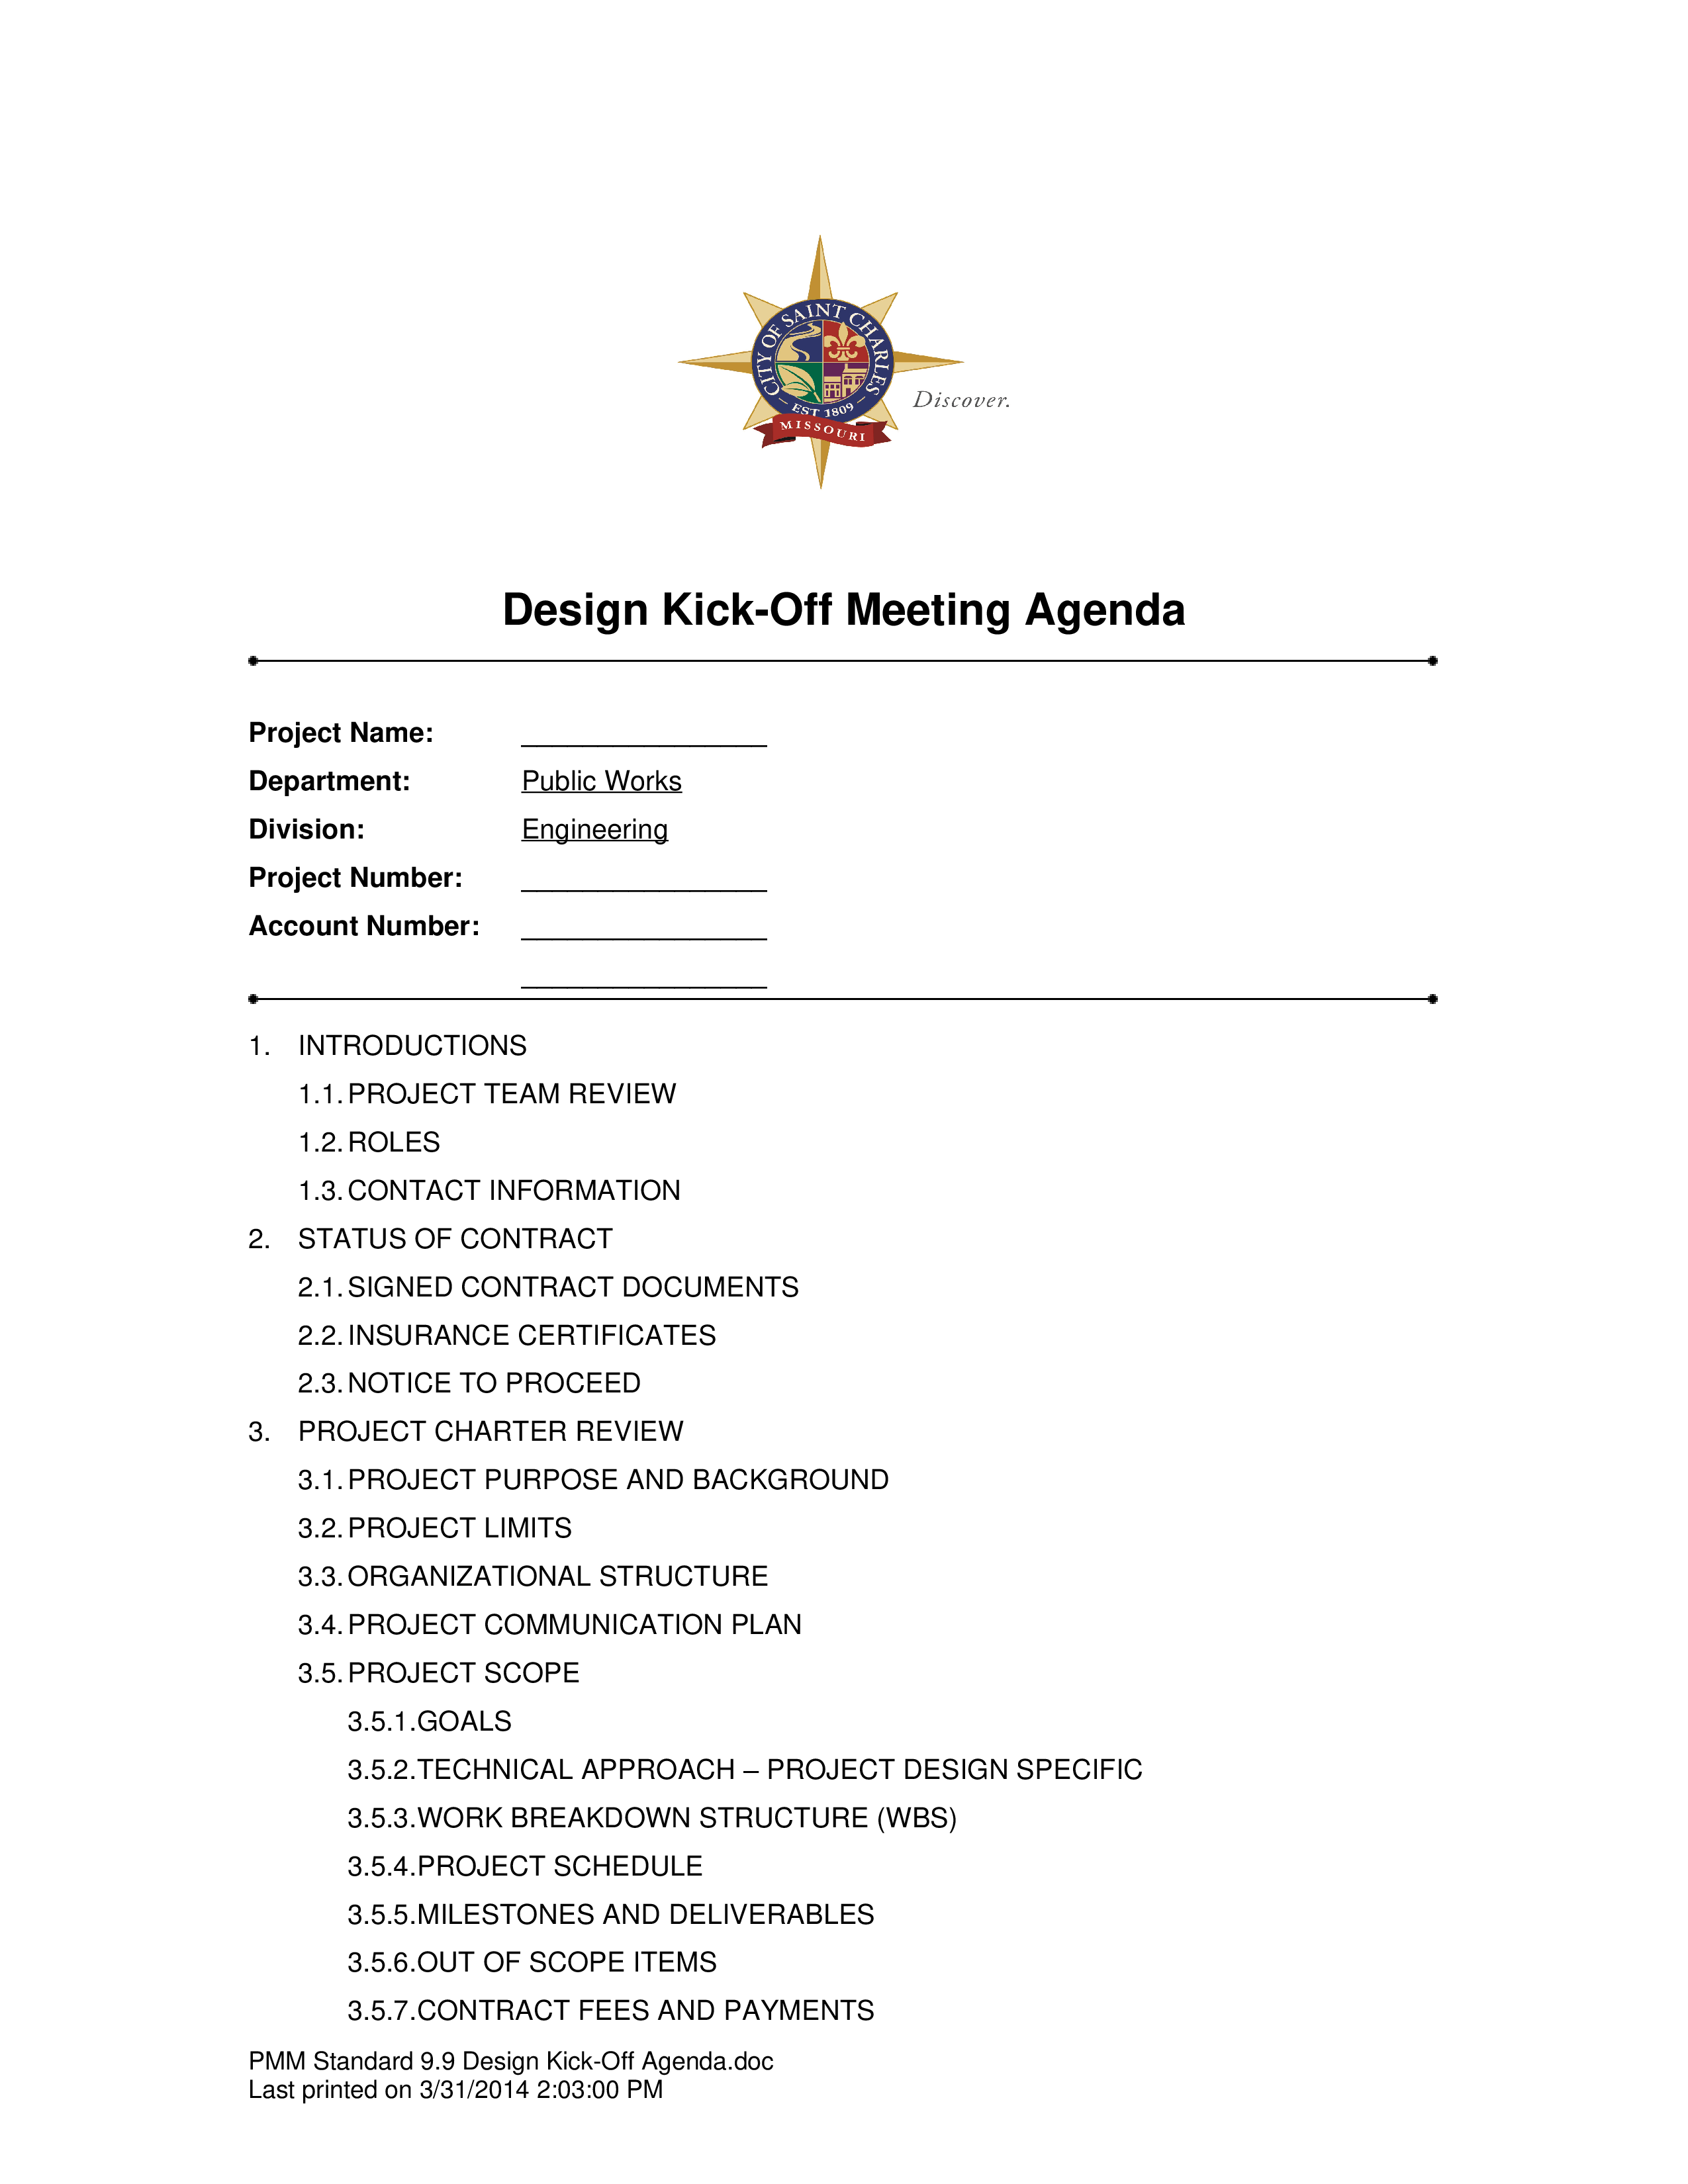 Kostenloses Kick Off Design Meeting Agenda For Kick Off Meeting Agenda Template